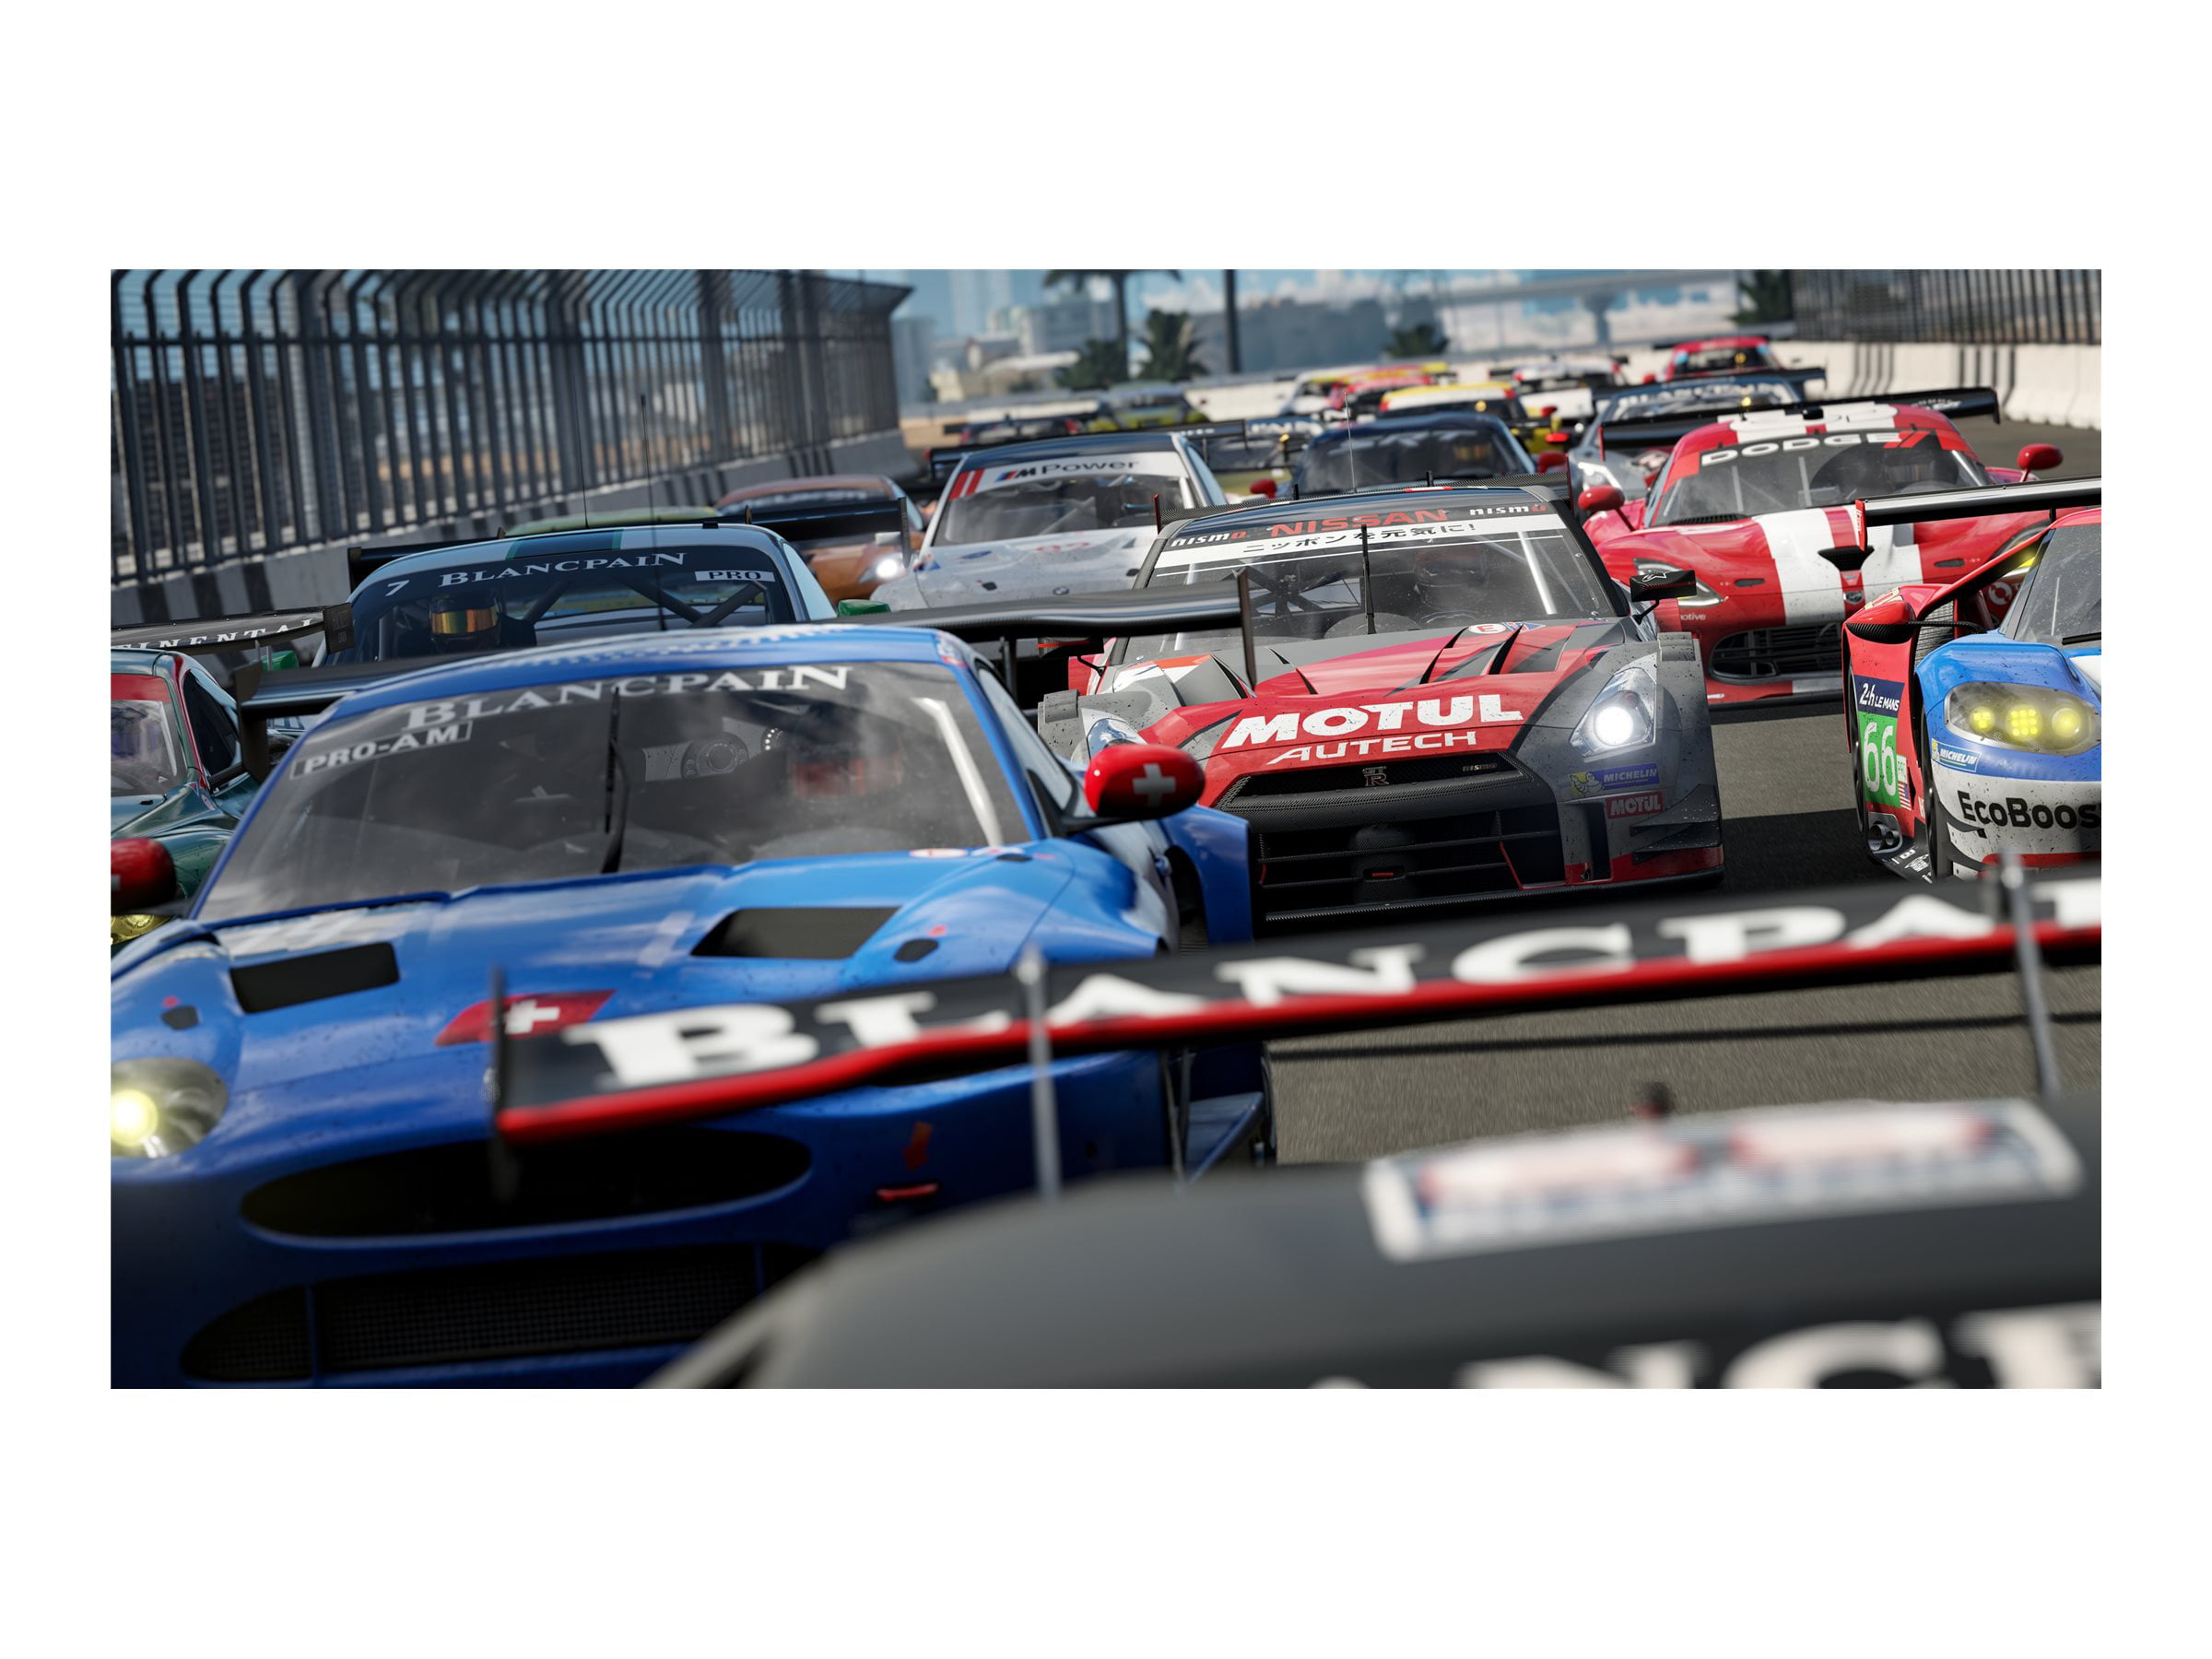 Forza Motorsport 7 (Xone) – igabiba